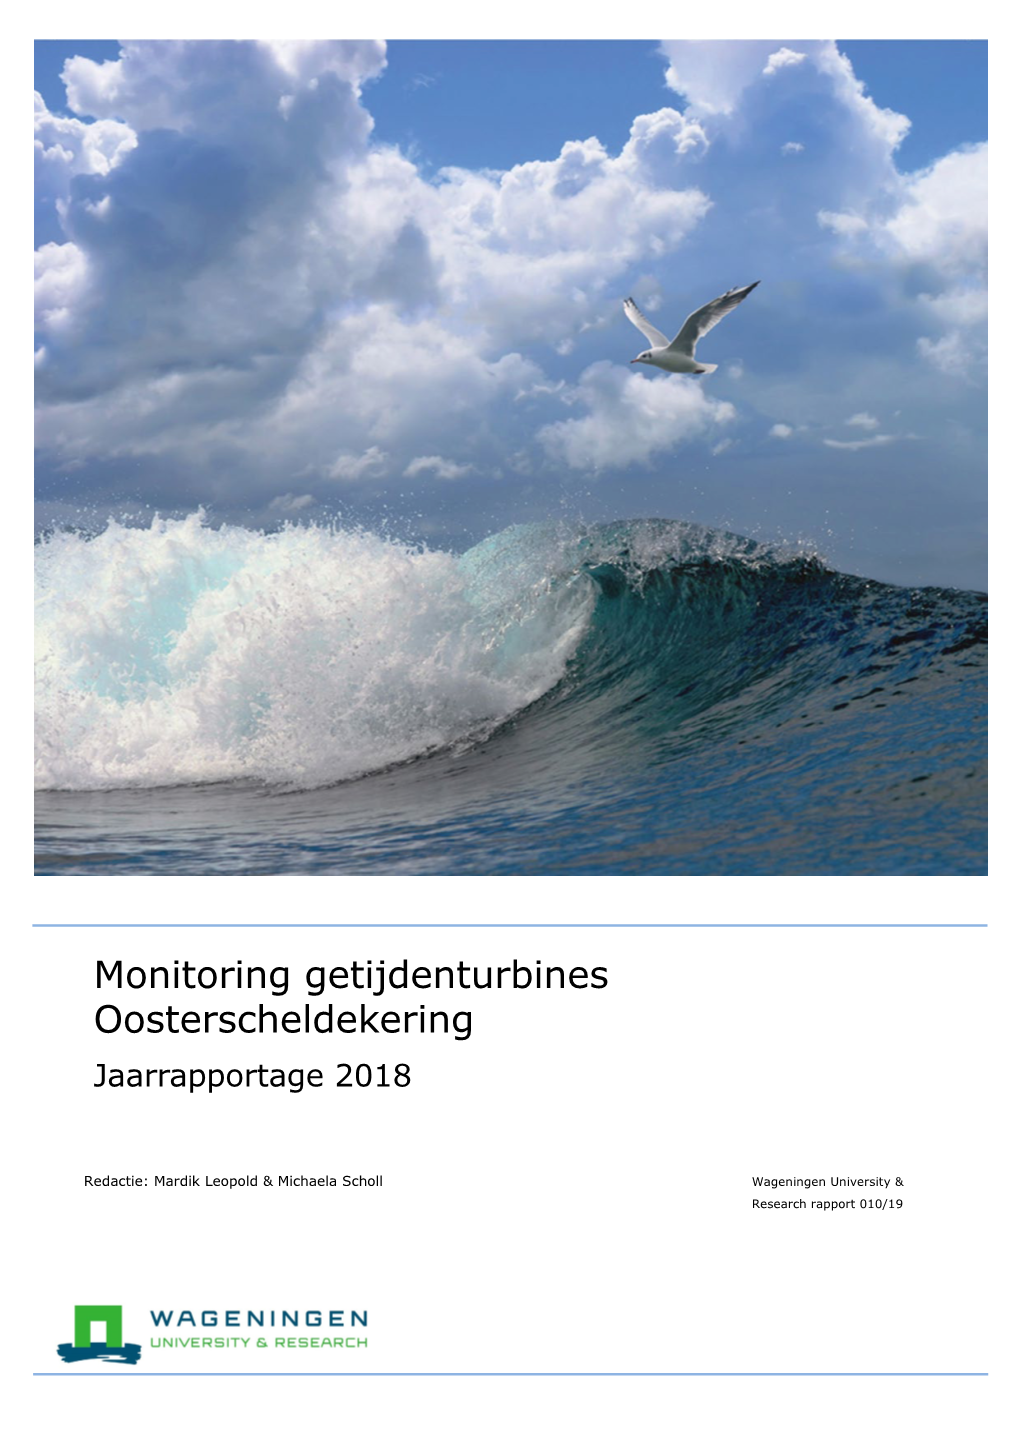 Oosterscheldekering Tidal Turbines Monitoring Annual Report